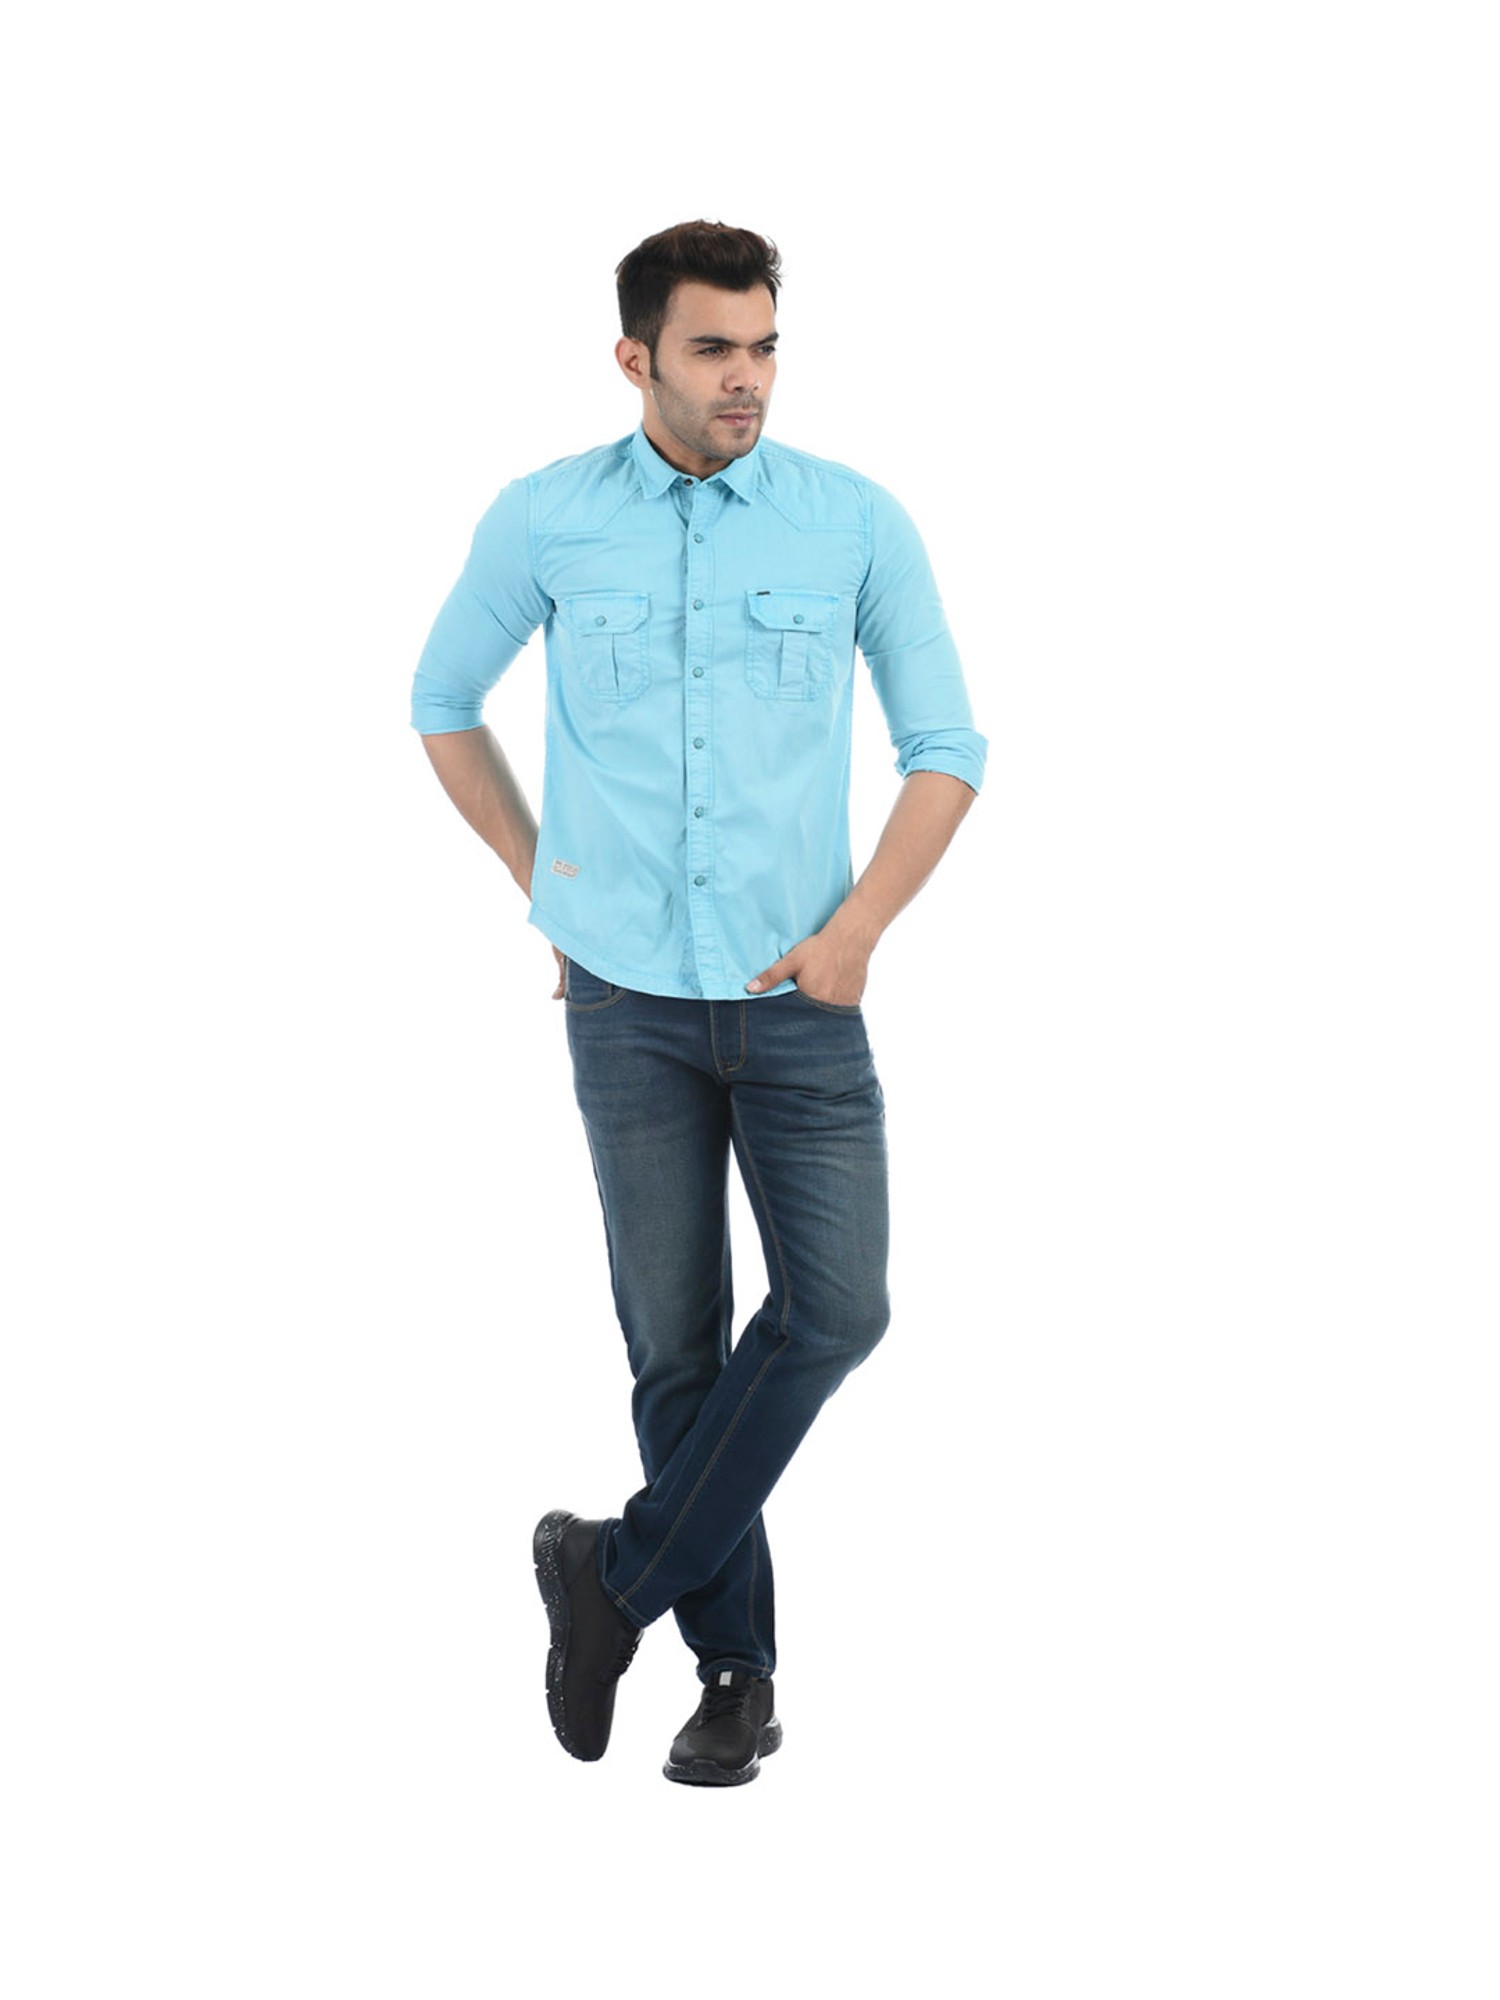 Best Pant Shirt Combination  Light Blue Pant Combination Ideas lightblue   by Look Stylish  YouTube